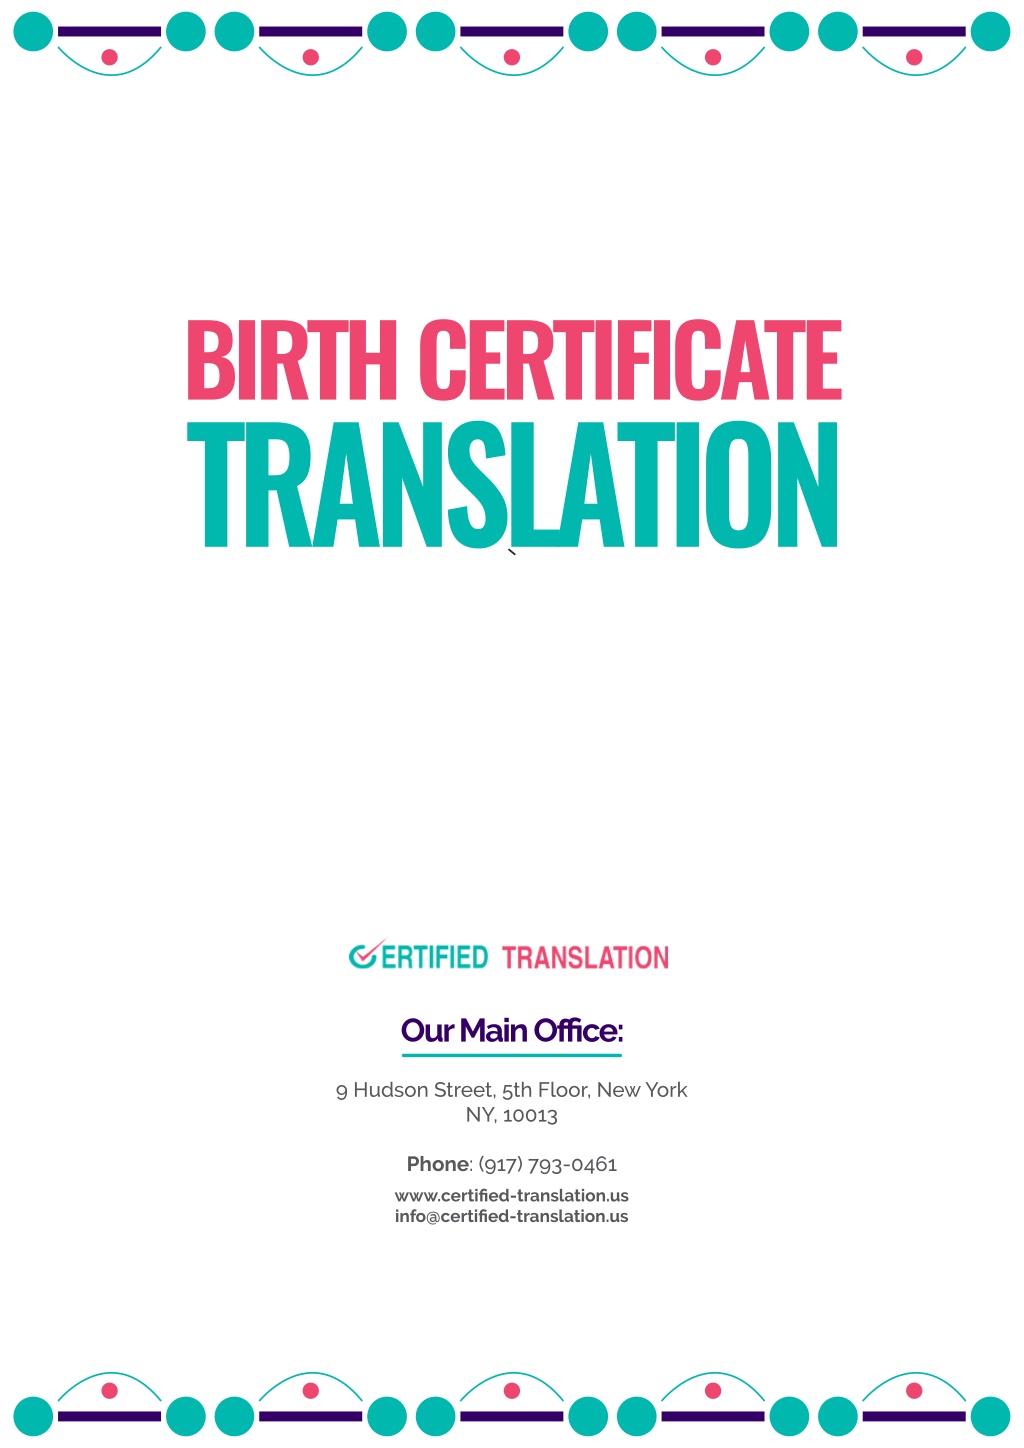 PPT Birth Certificate Translation NYC Certified Translation